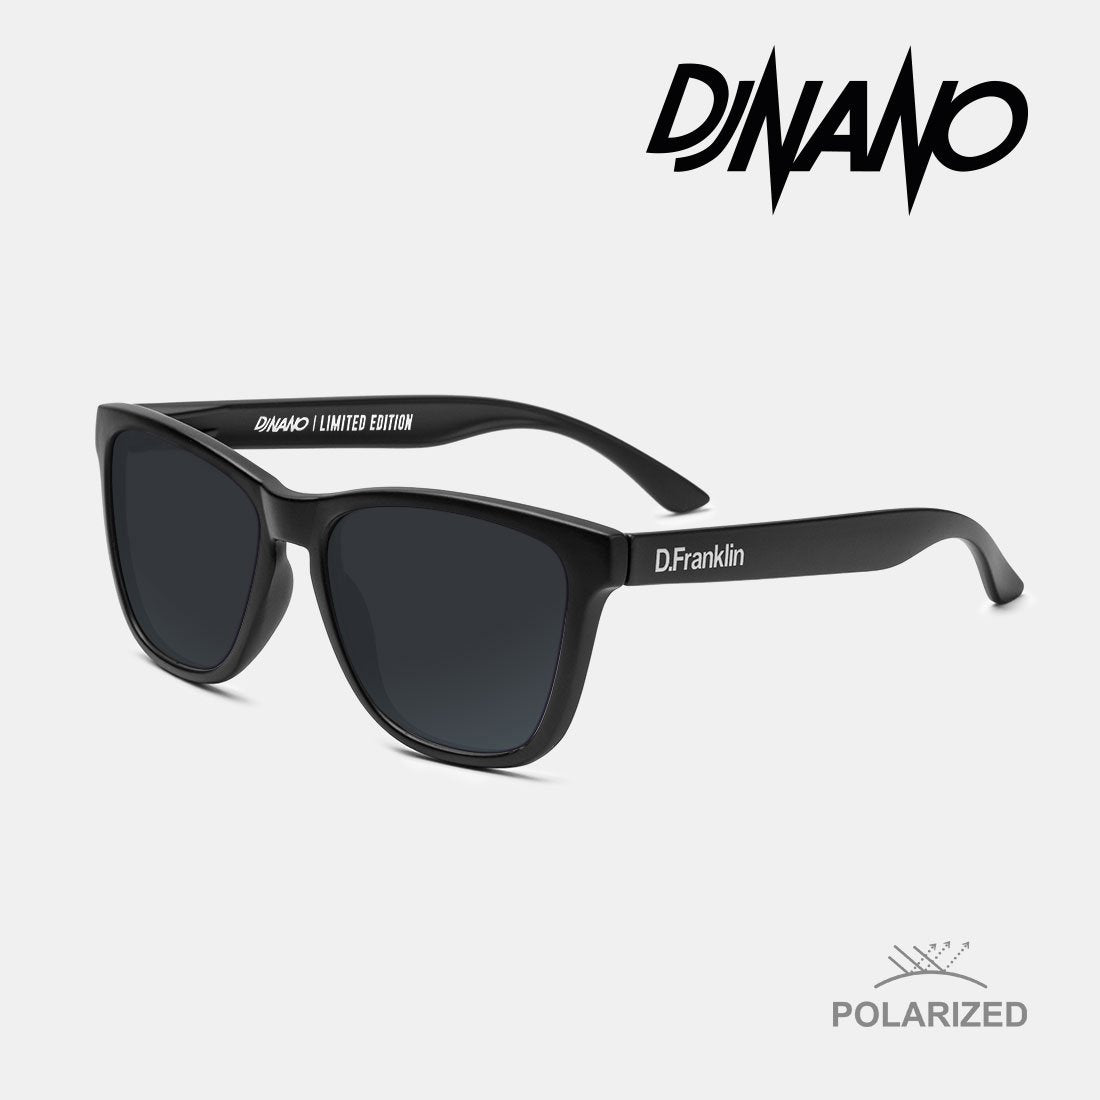 DJ NANO Limited Edition